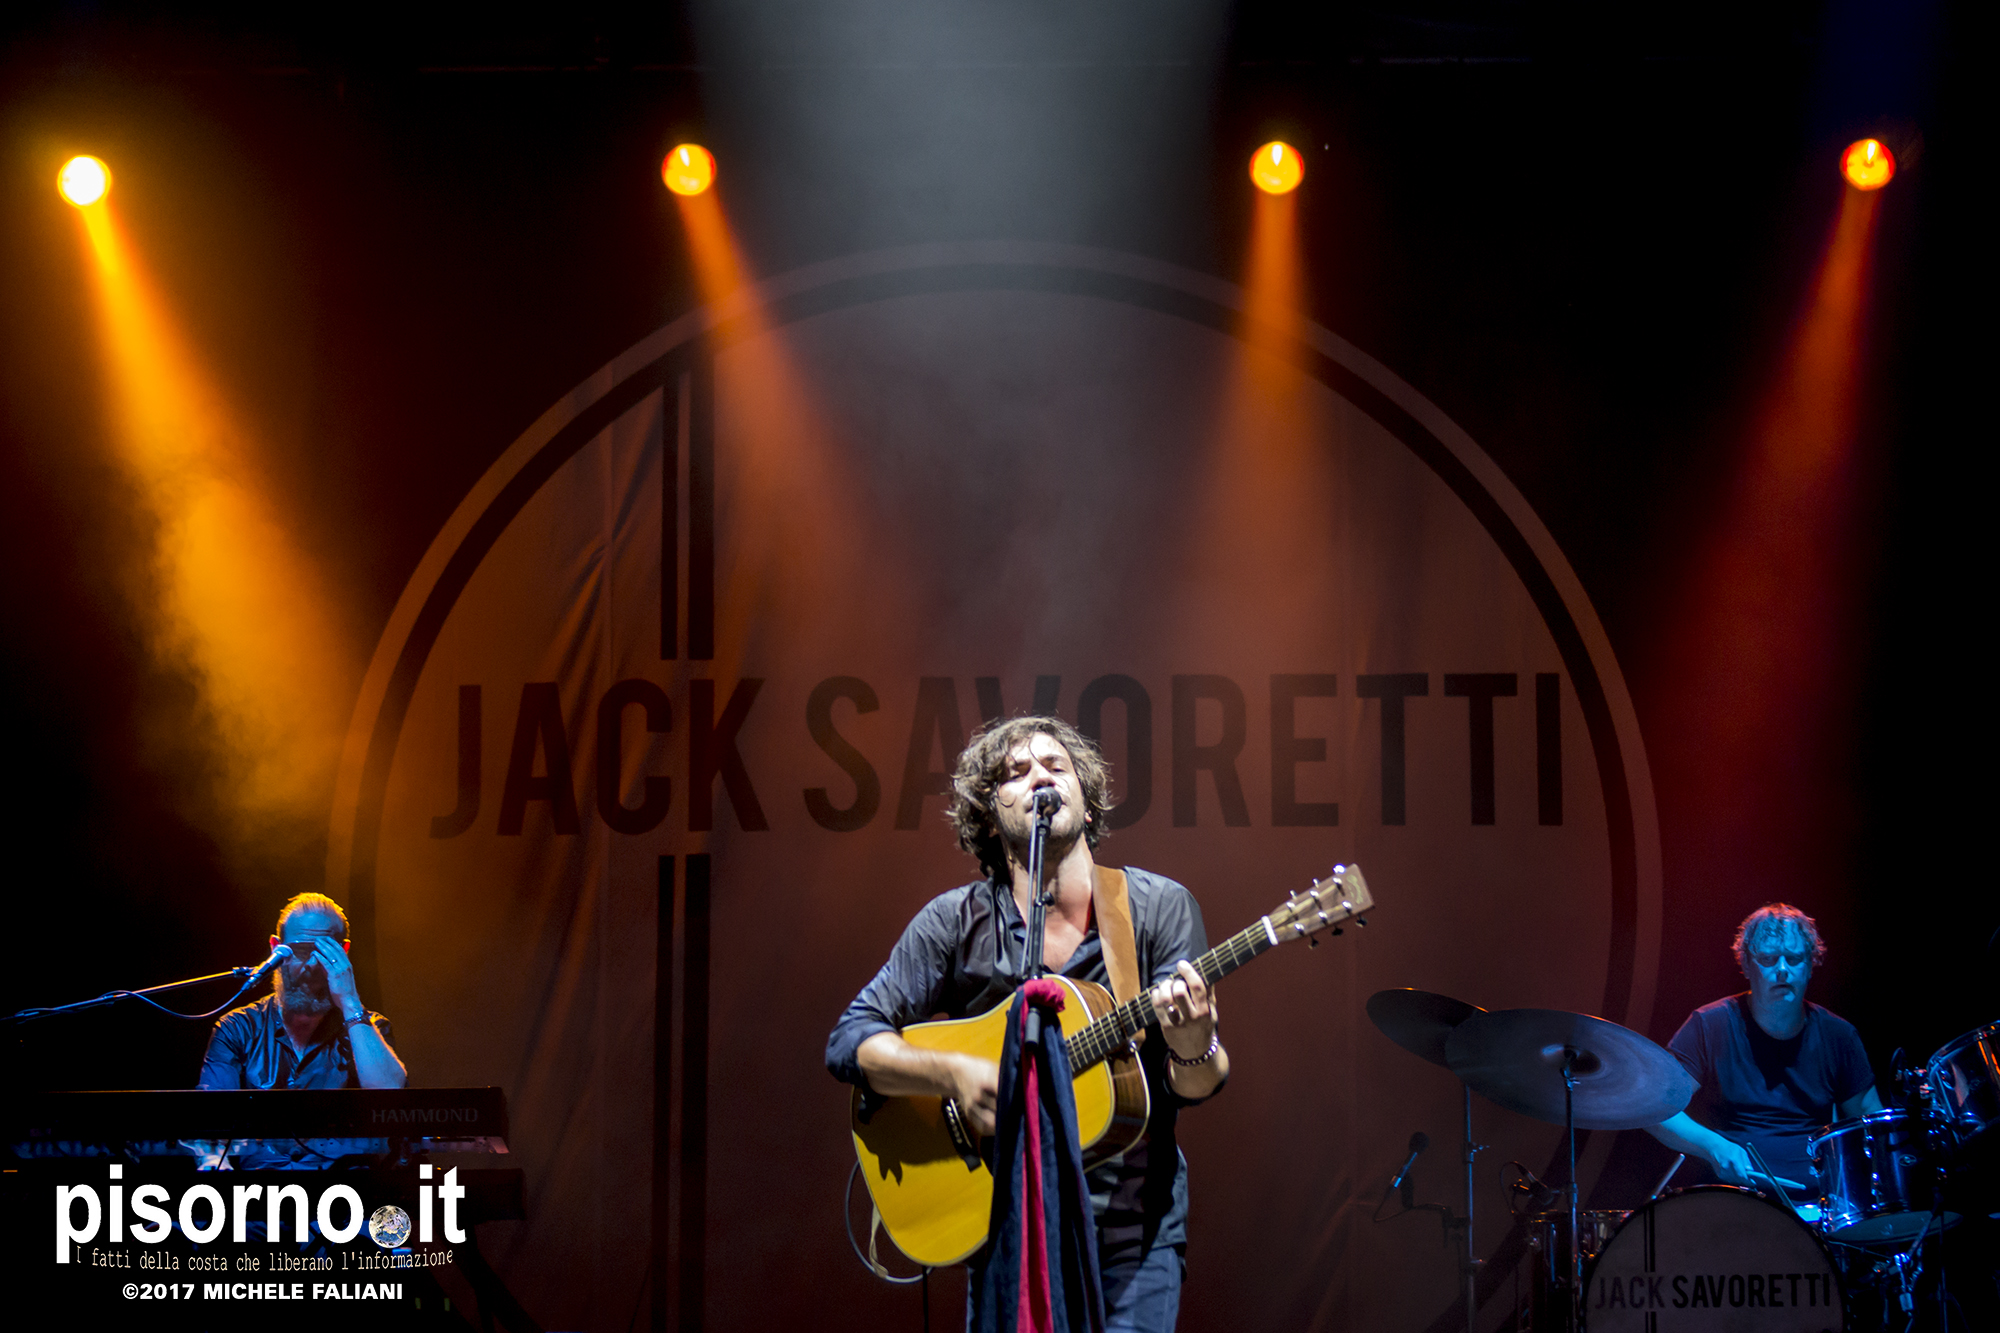 Jack Savoretti Live @ Villa Bertelli 22/7/2017